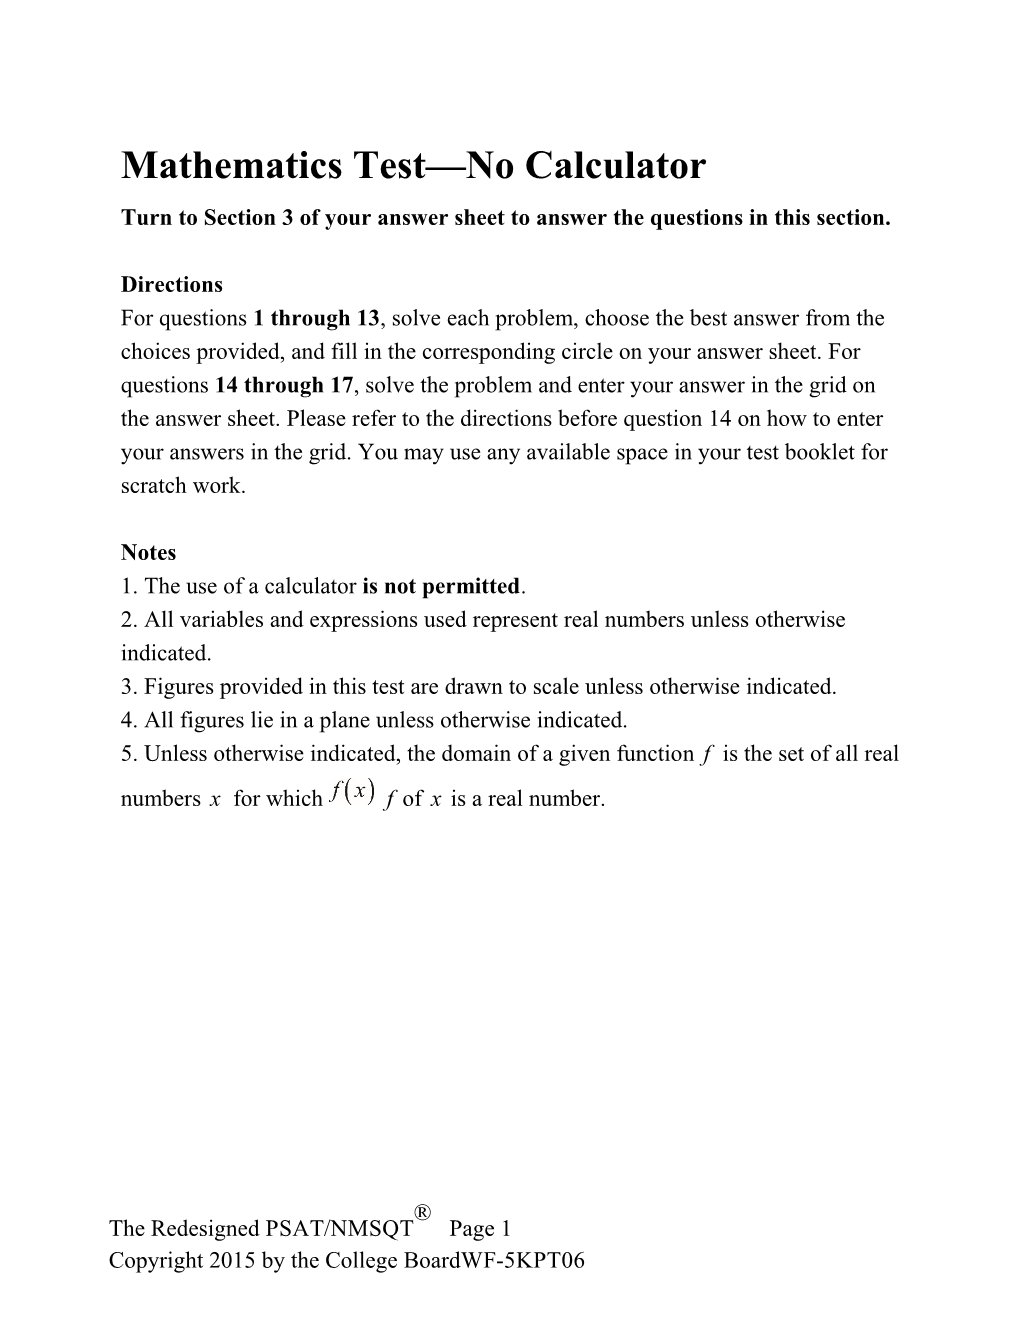 Mathematics Test No Calculator